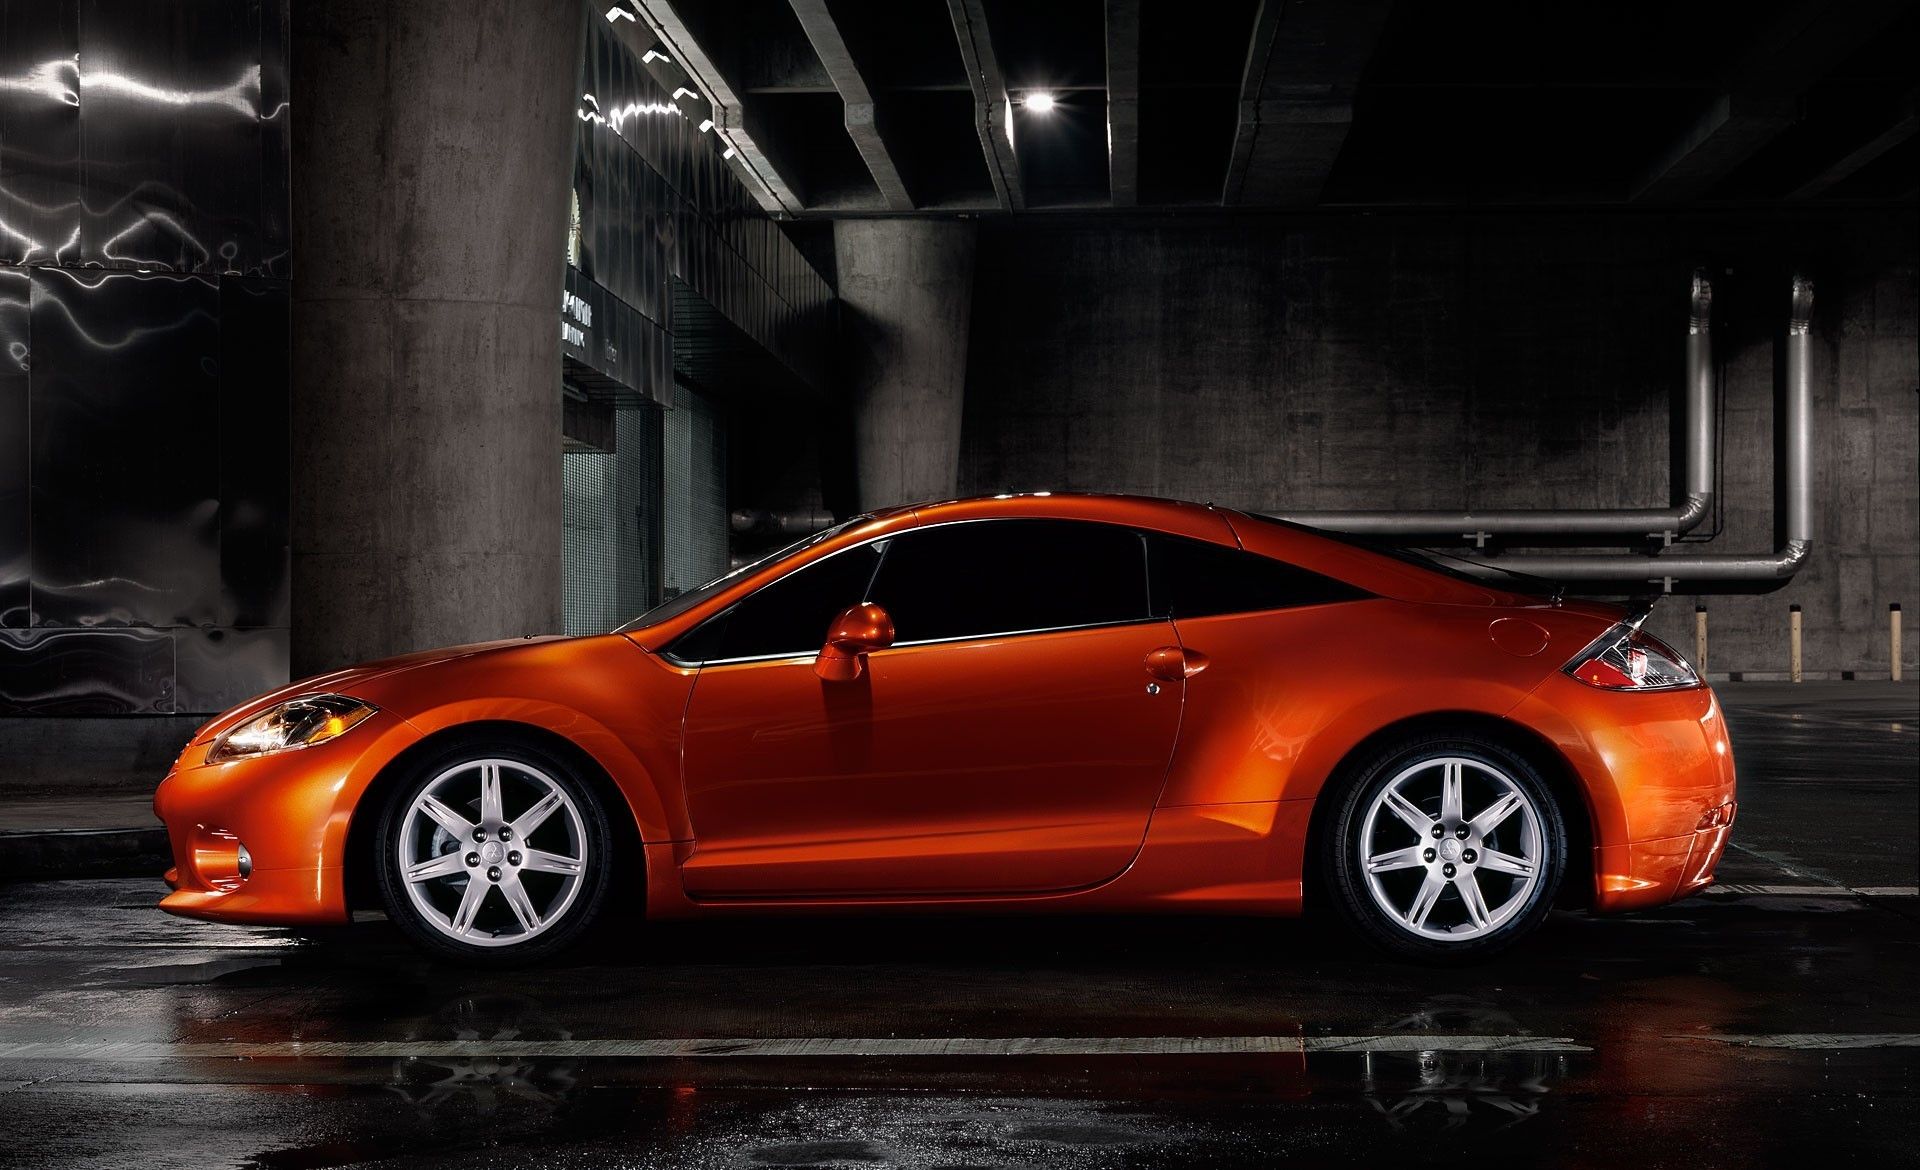 cars orange mitsubishi eclipse vehicles side view HD Wallpaper ...